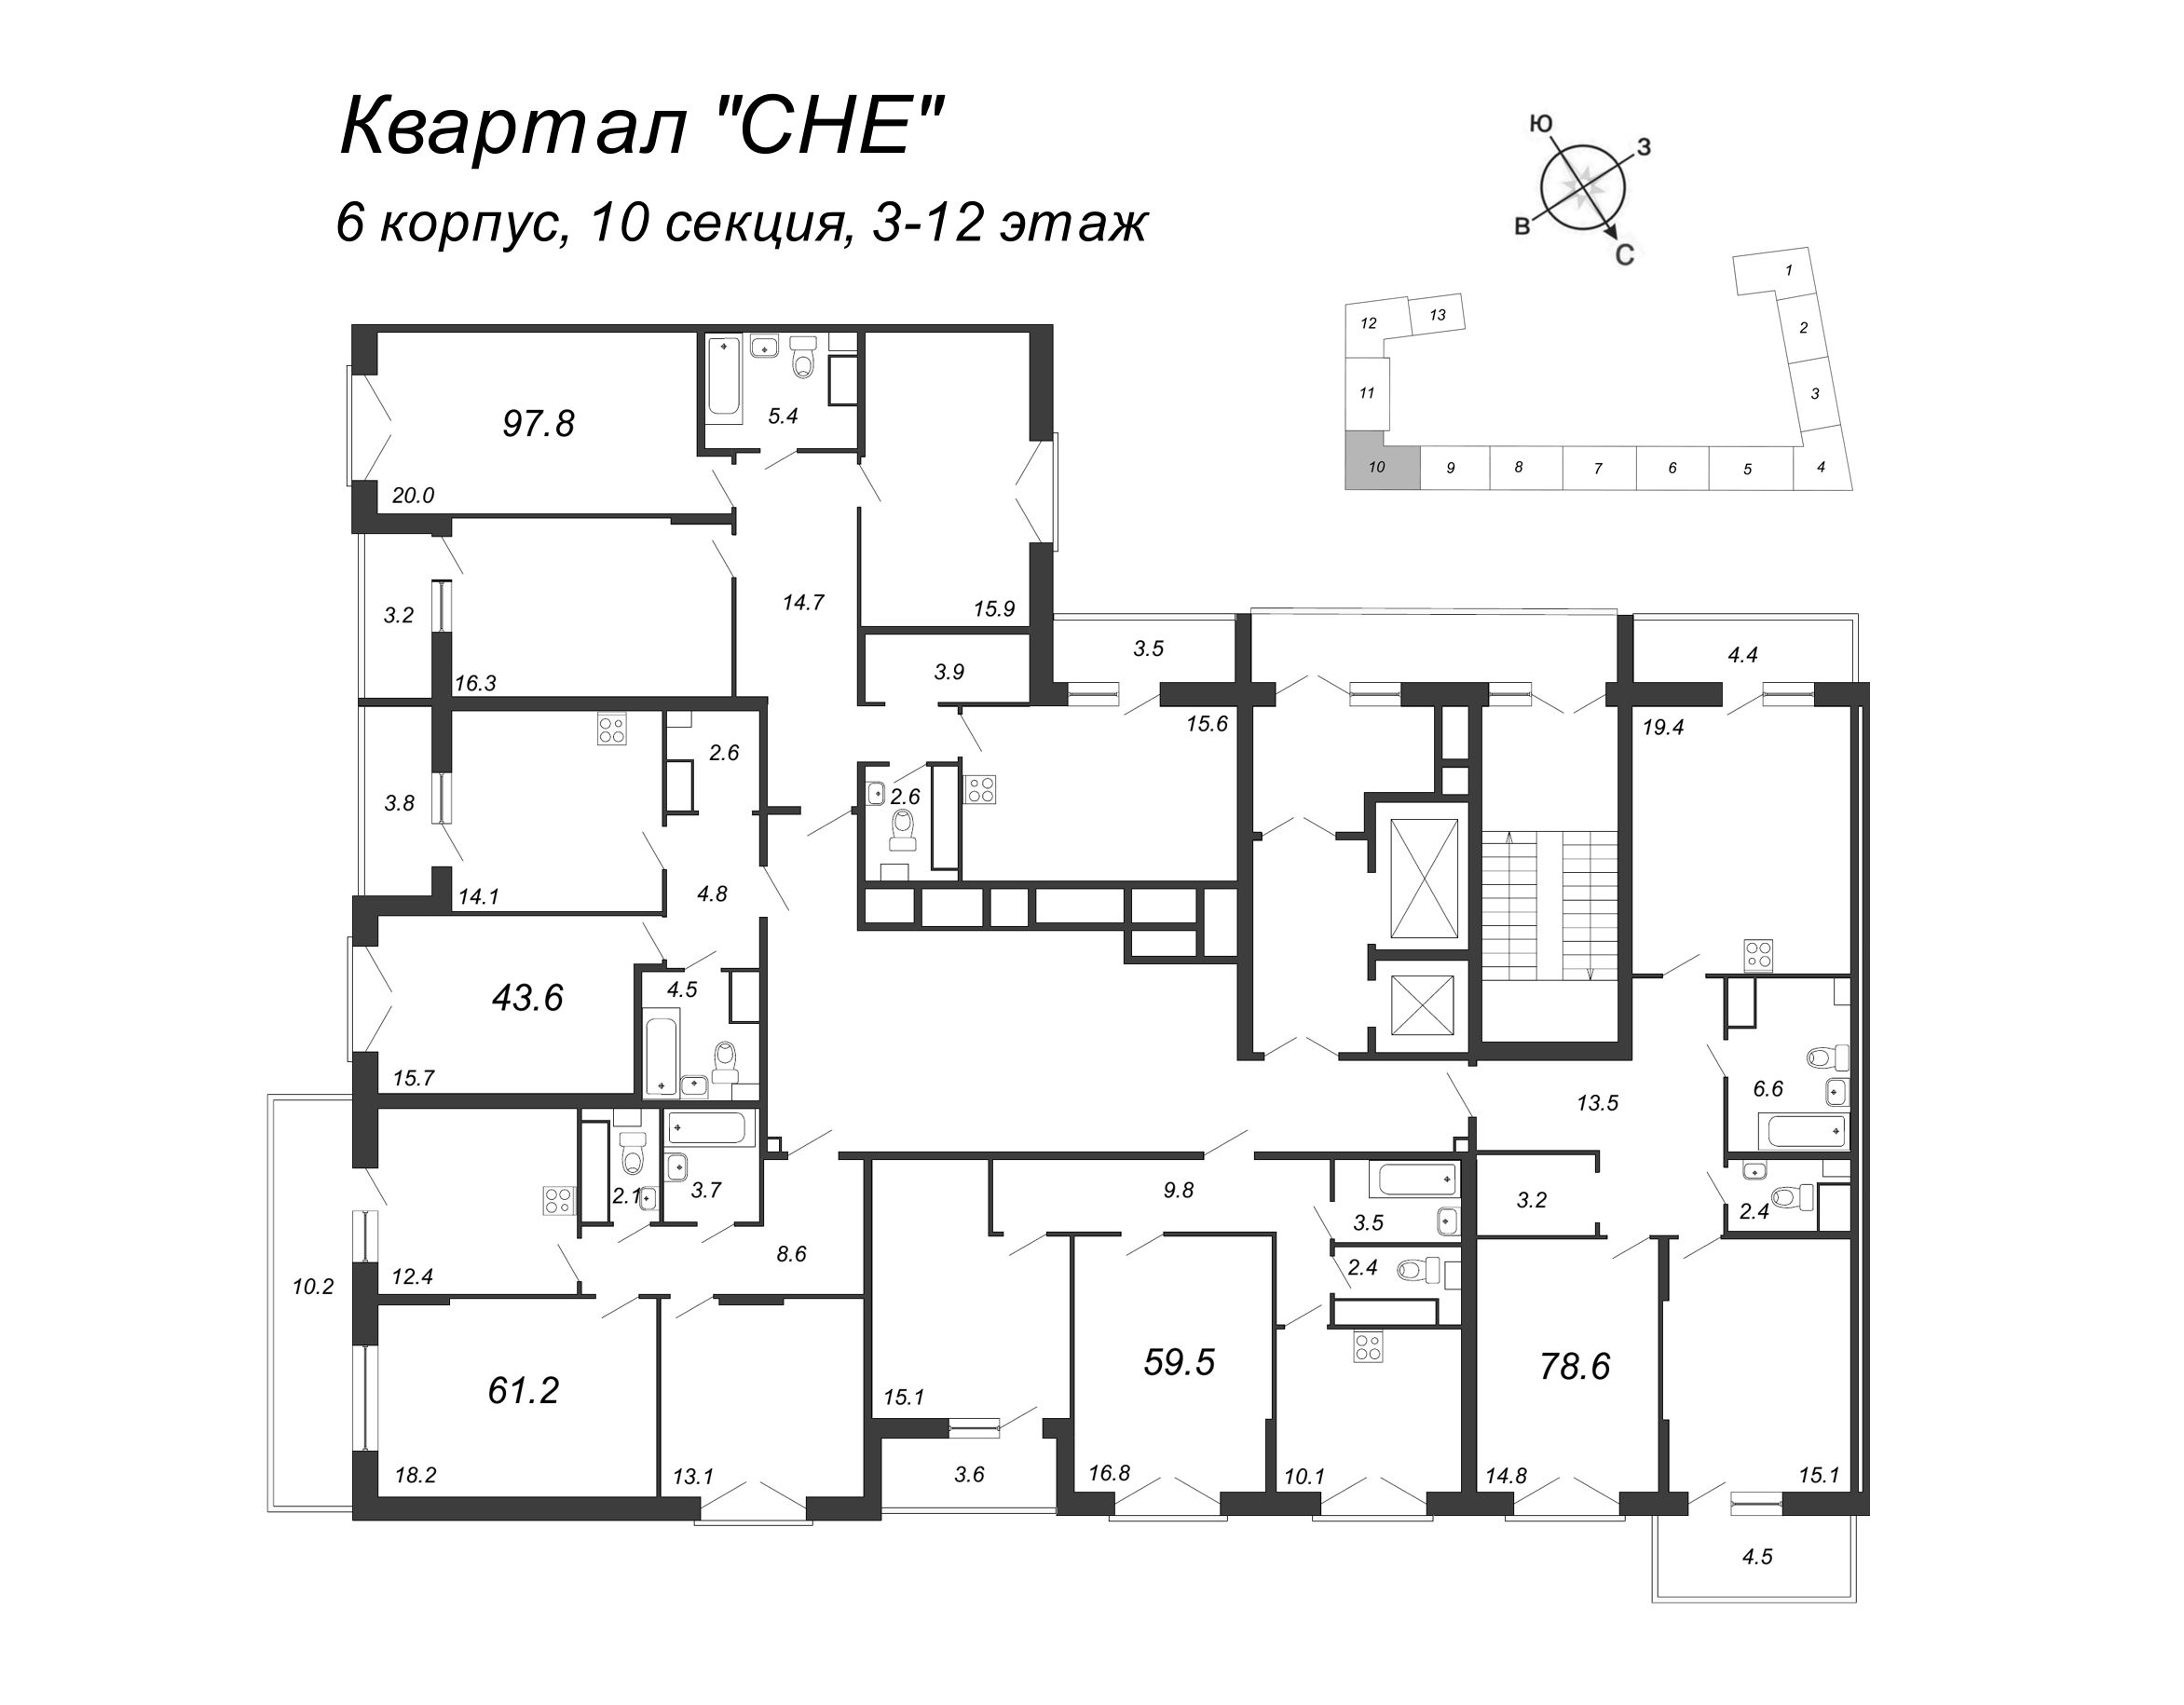 3-комнатная квартира, 99.8 м² в ЖК "Квартал Che" - планировка этажа